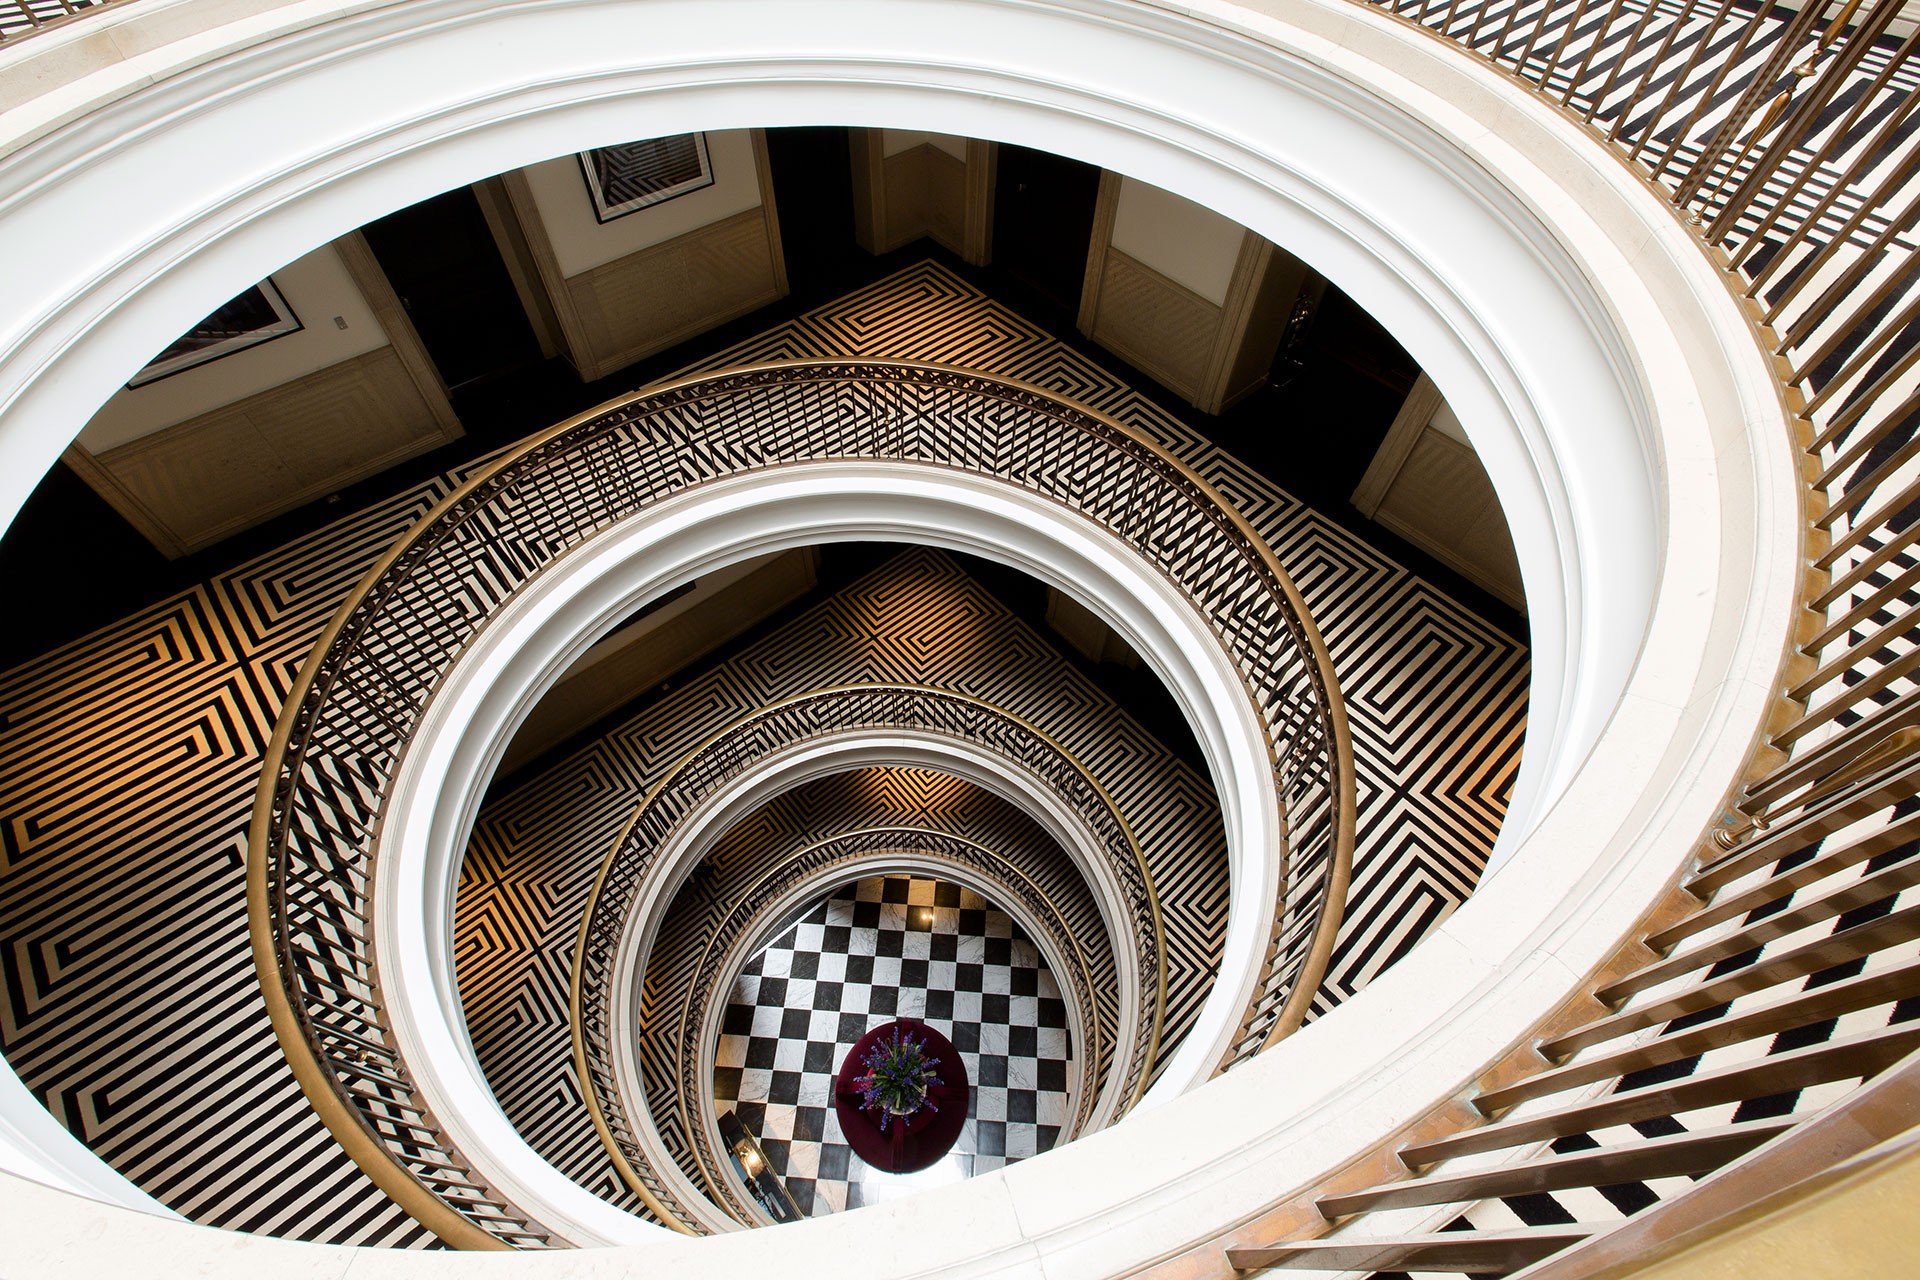 The circular stairwell in The Edinburgh Grand, in Scotland. Picture: The Edinburgh Grand